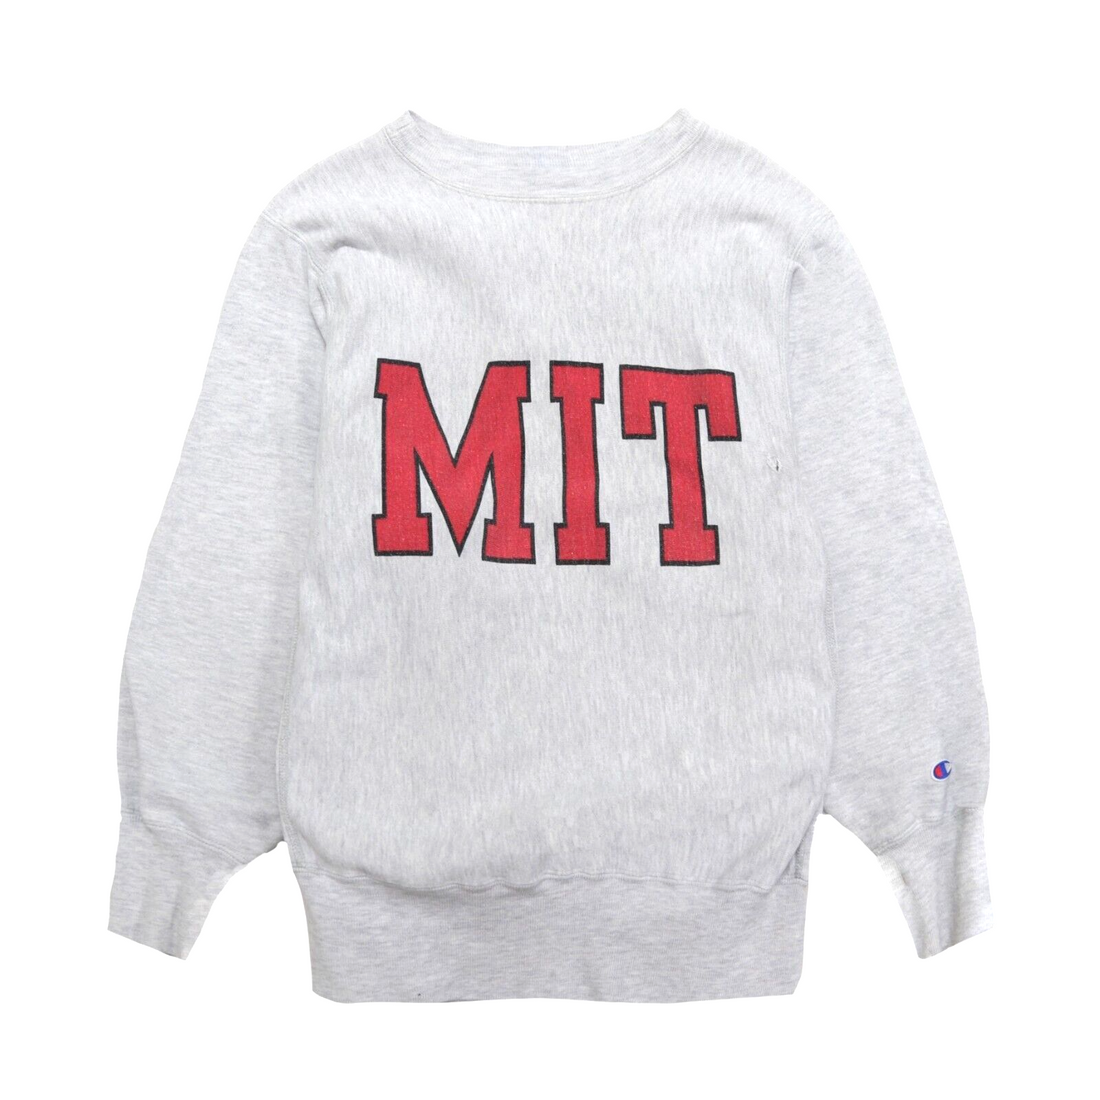 Vintage MIT Champion Reverse Weave Sweatshirt Crewneck Size Medium 90s NCAA